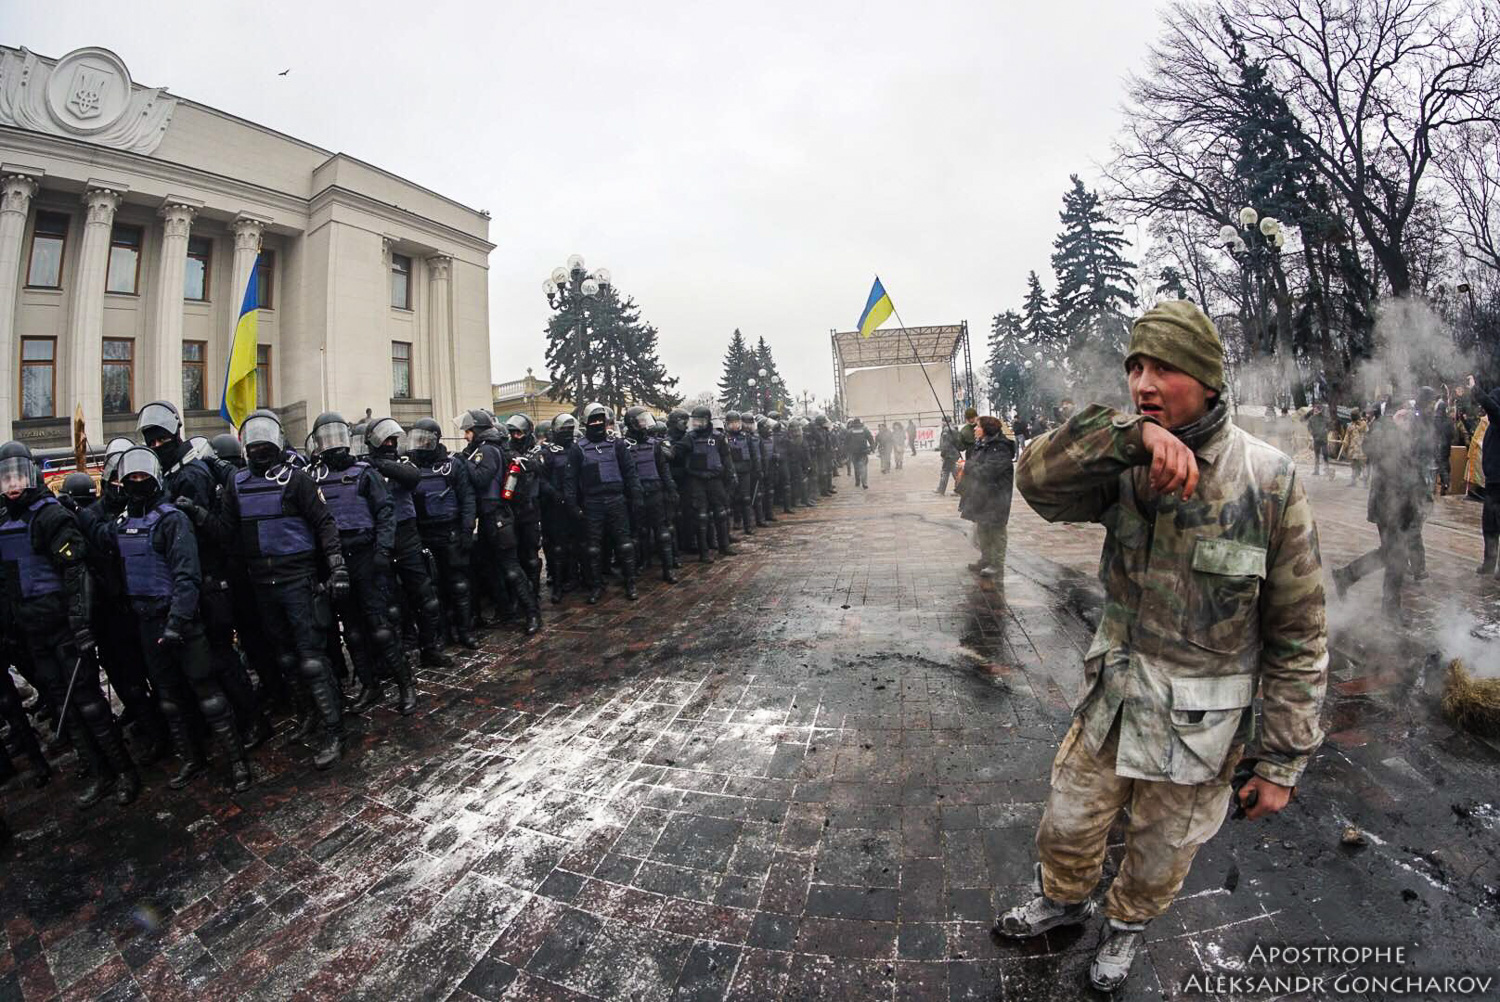 sanctions - Ukraine News in brief. Tuesday 16 January. [Ukrainian sources] 4e141d7b47159f66fdba6db27beab3cd